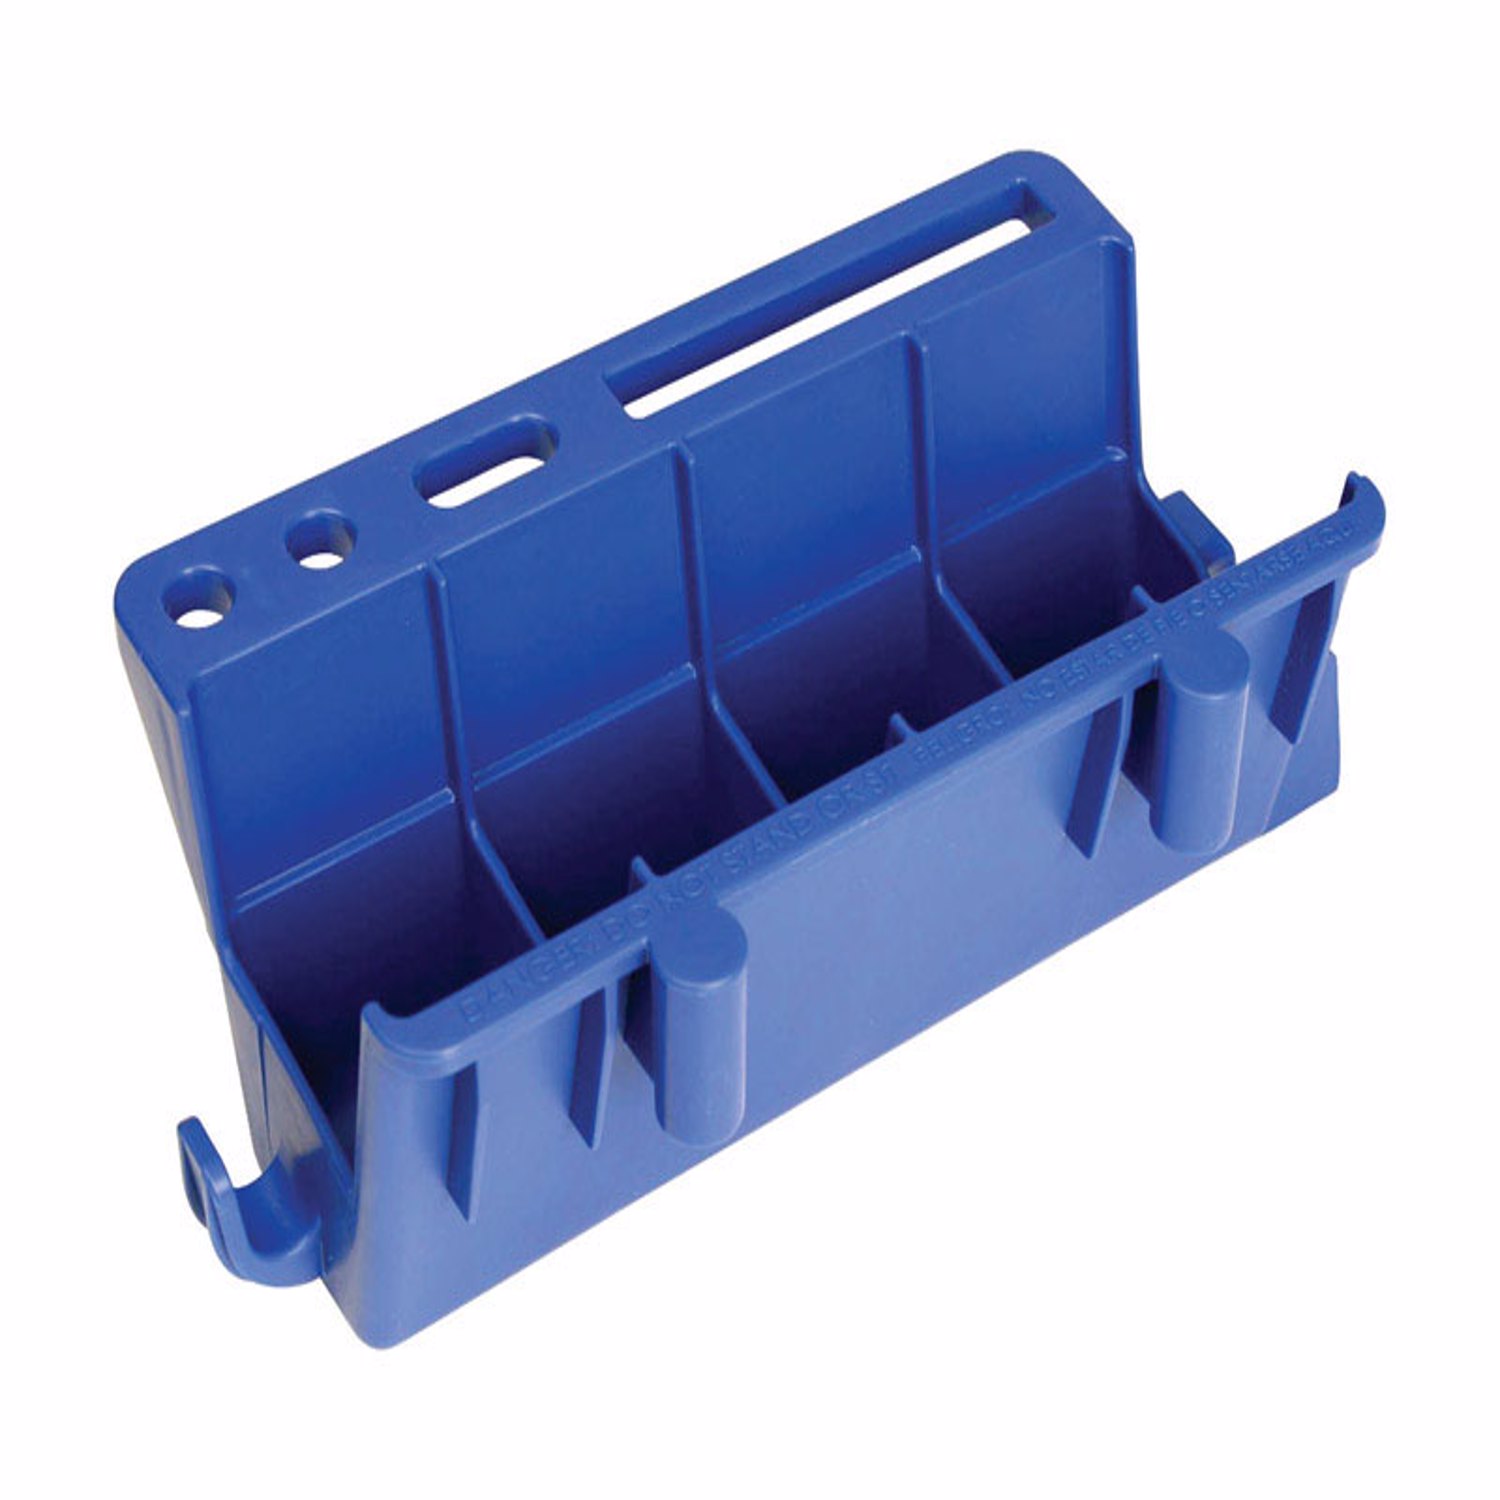 Werner Job Caddy Plastic Blue Ladder Organizer Attachment 1 pk